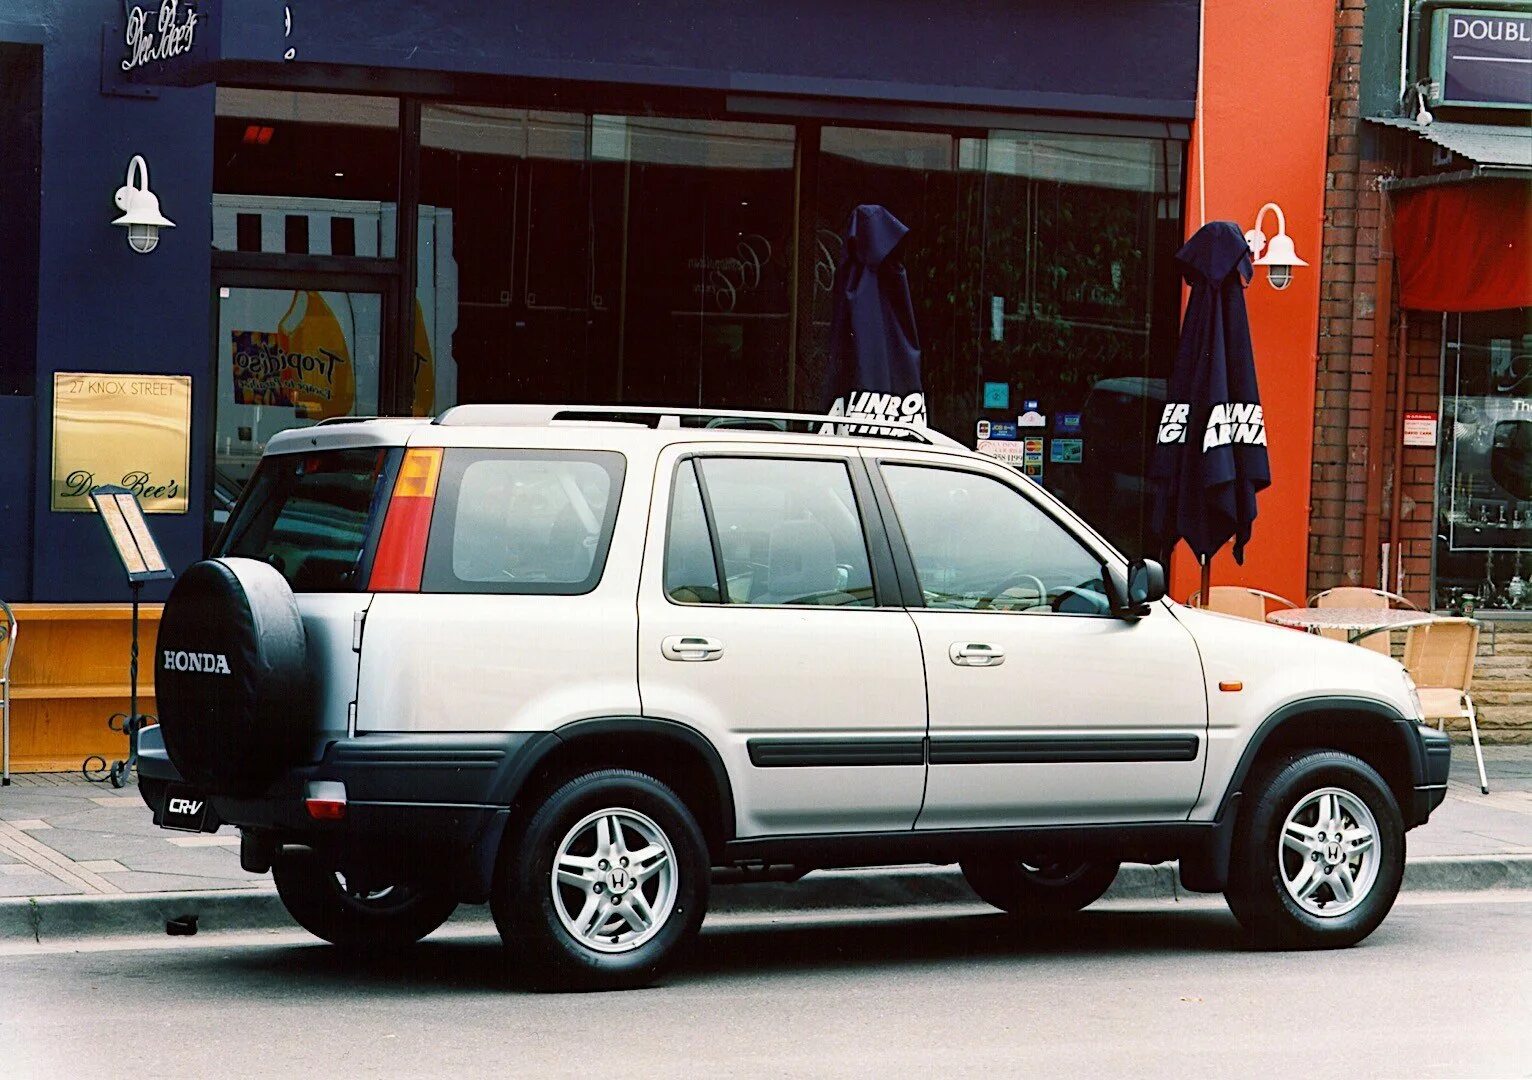 Хонда црв 2001 год. Honda CRV 1997. Honda CR-V rd1 1997. Хонда СРВ 1997. Honda CR-V 1 2001.